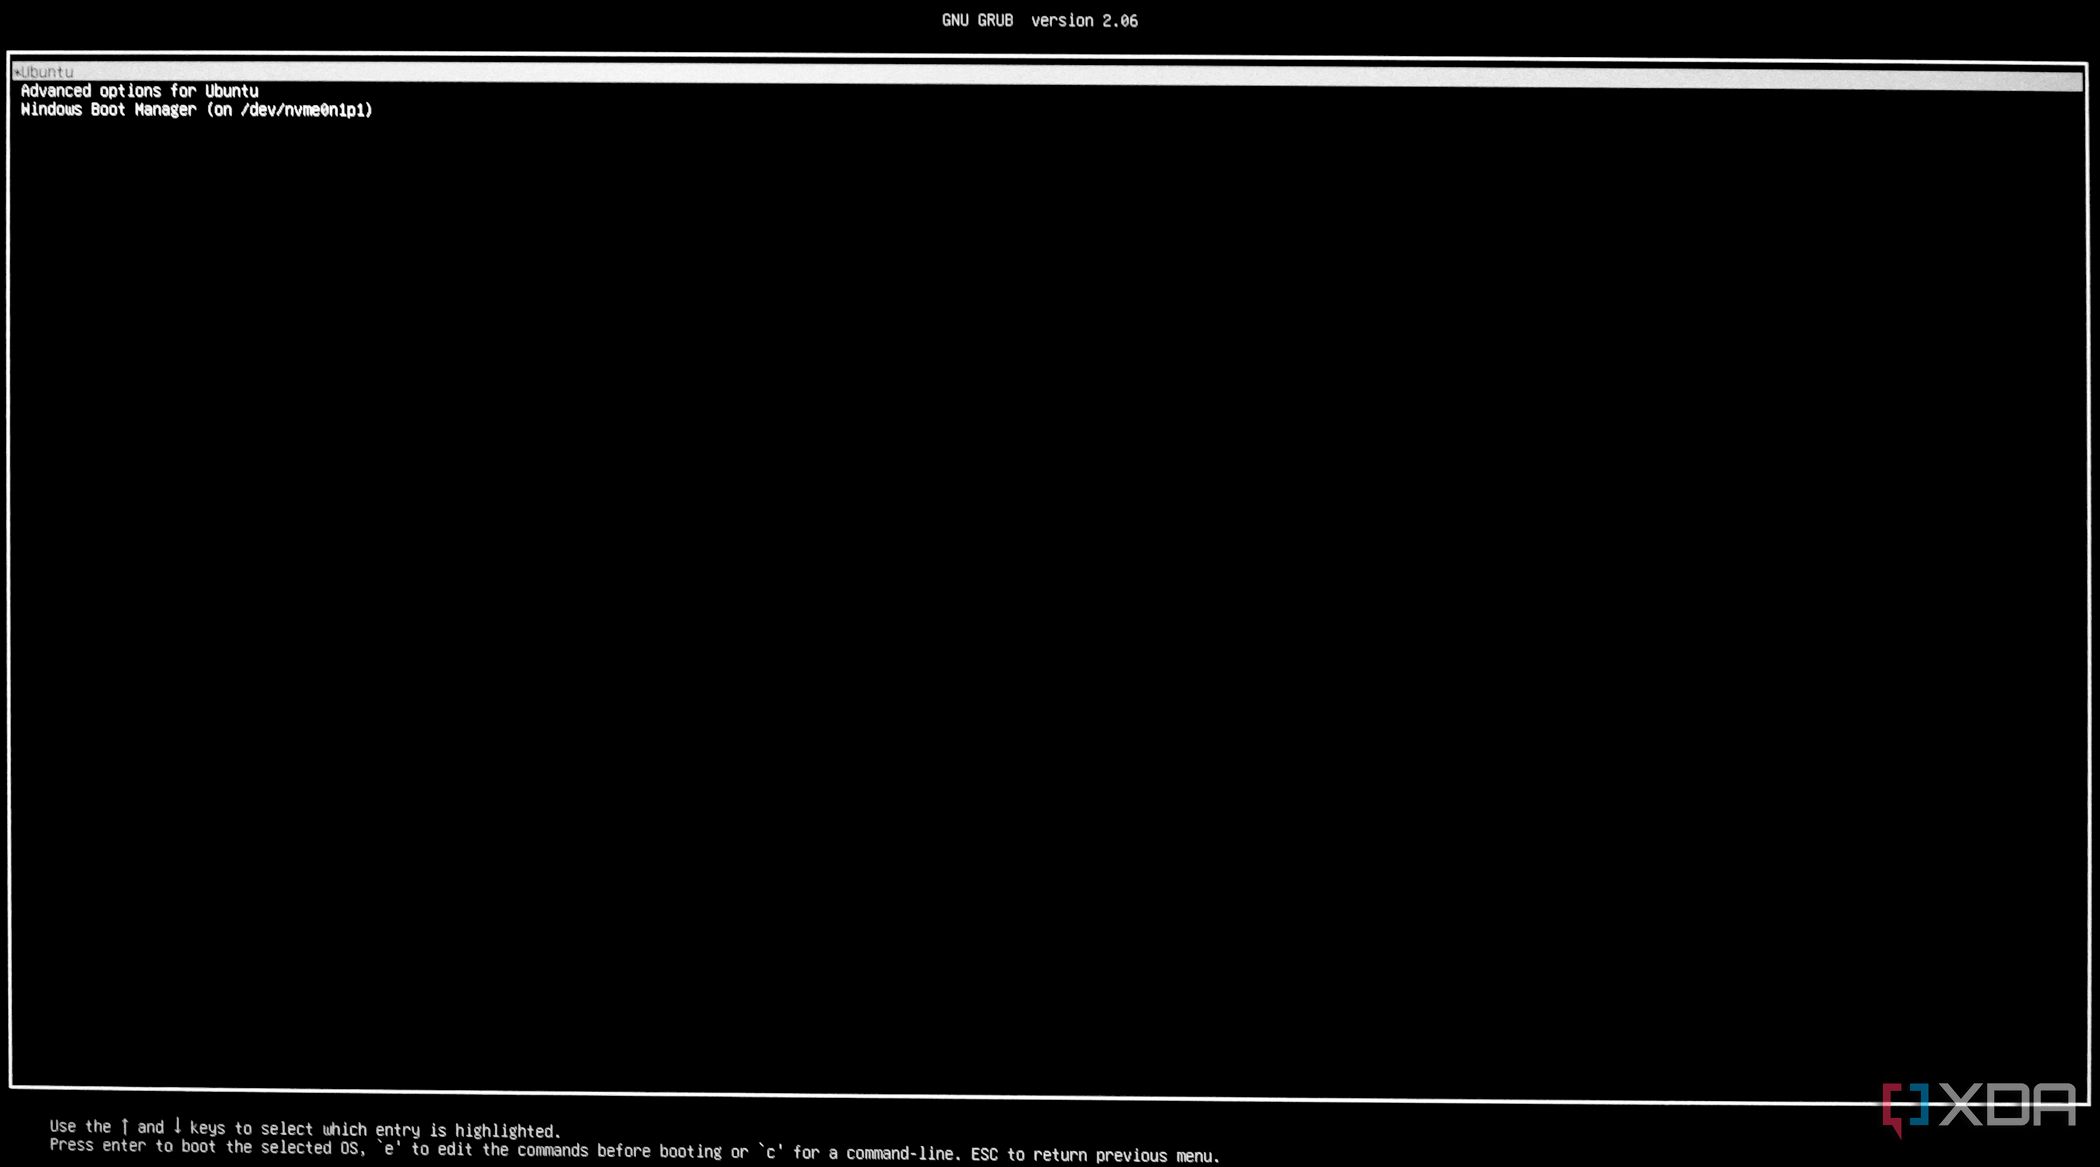 Screenshot of Ubuntu Boot Manager with options to boot into Ubuntu or Windows